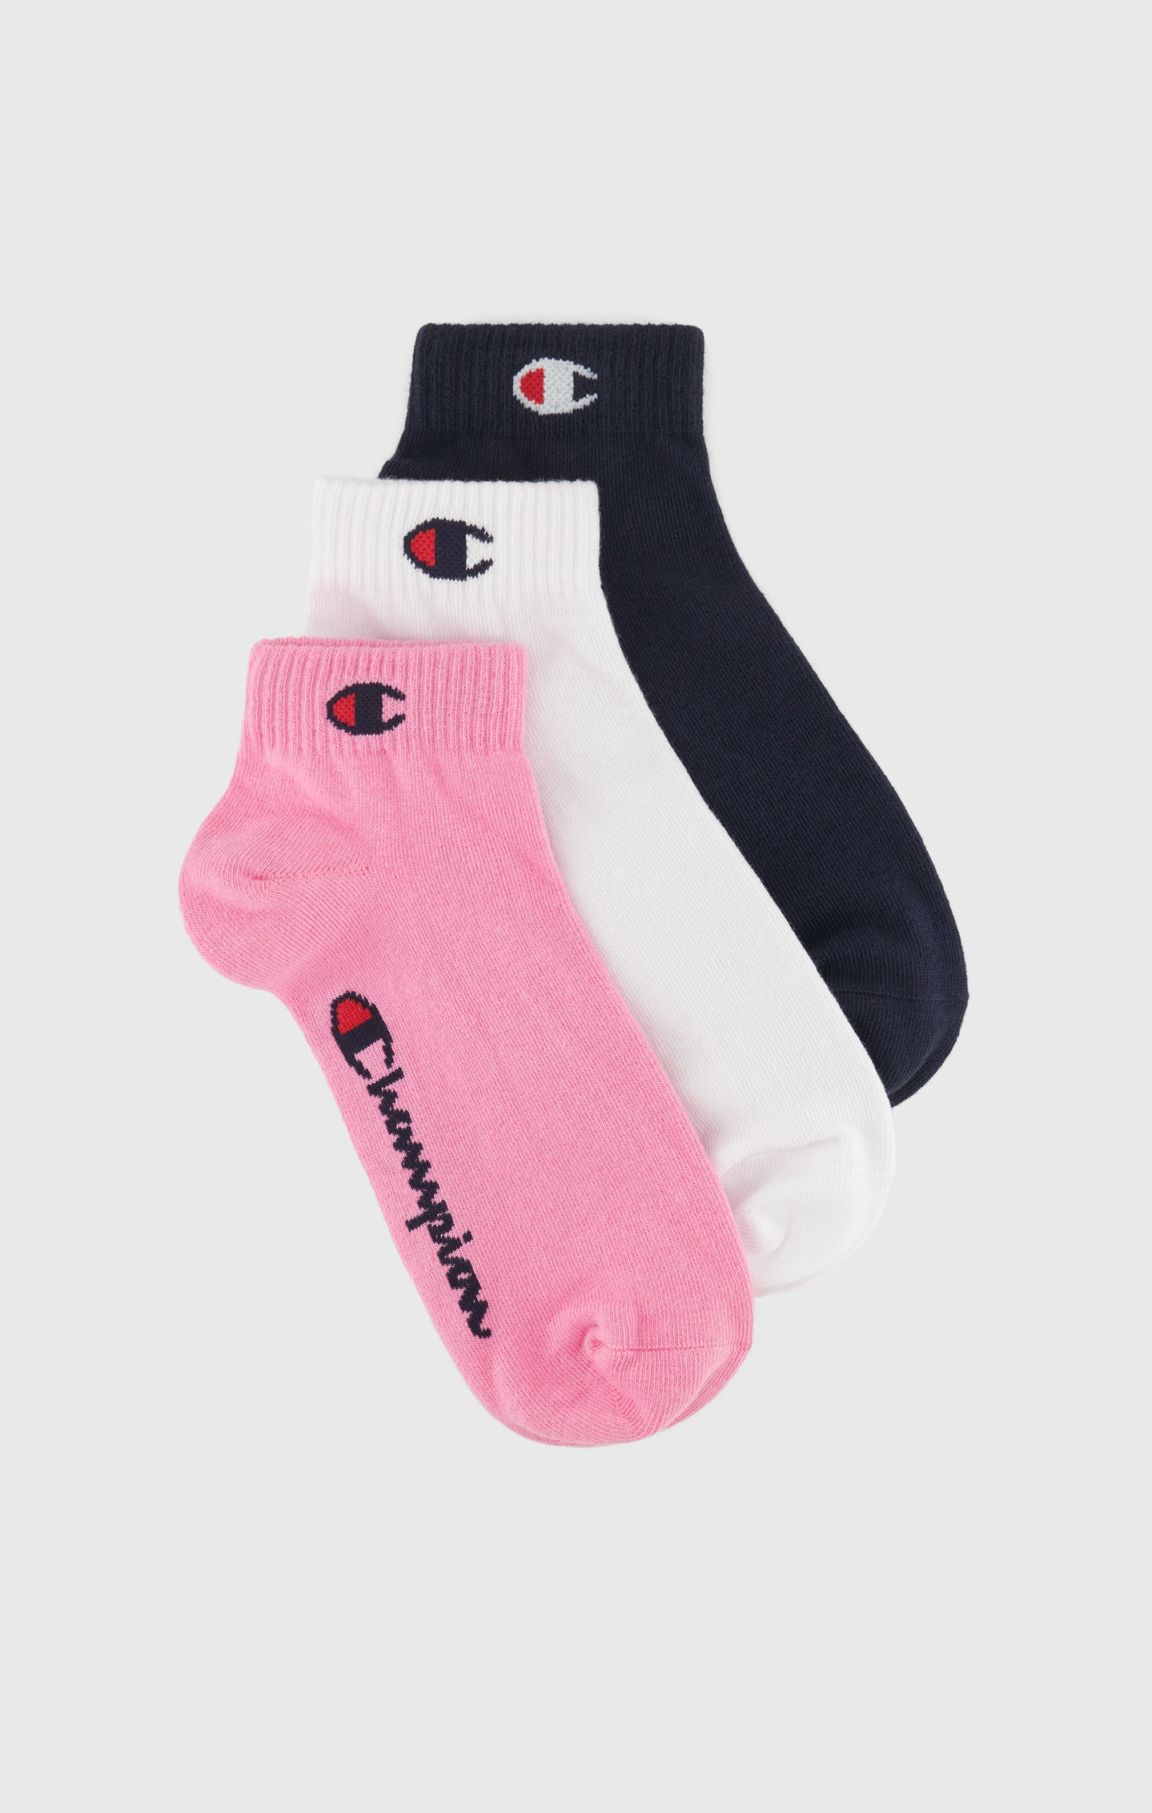 Socken mit C-Logo, 3 Paar